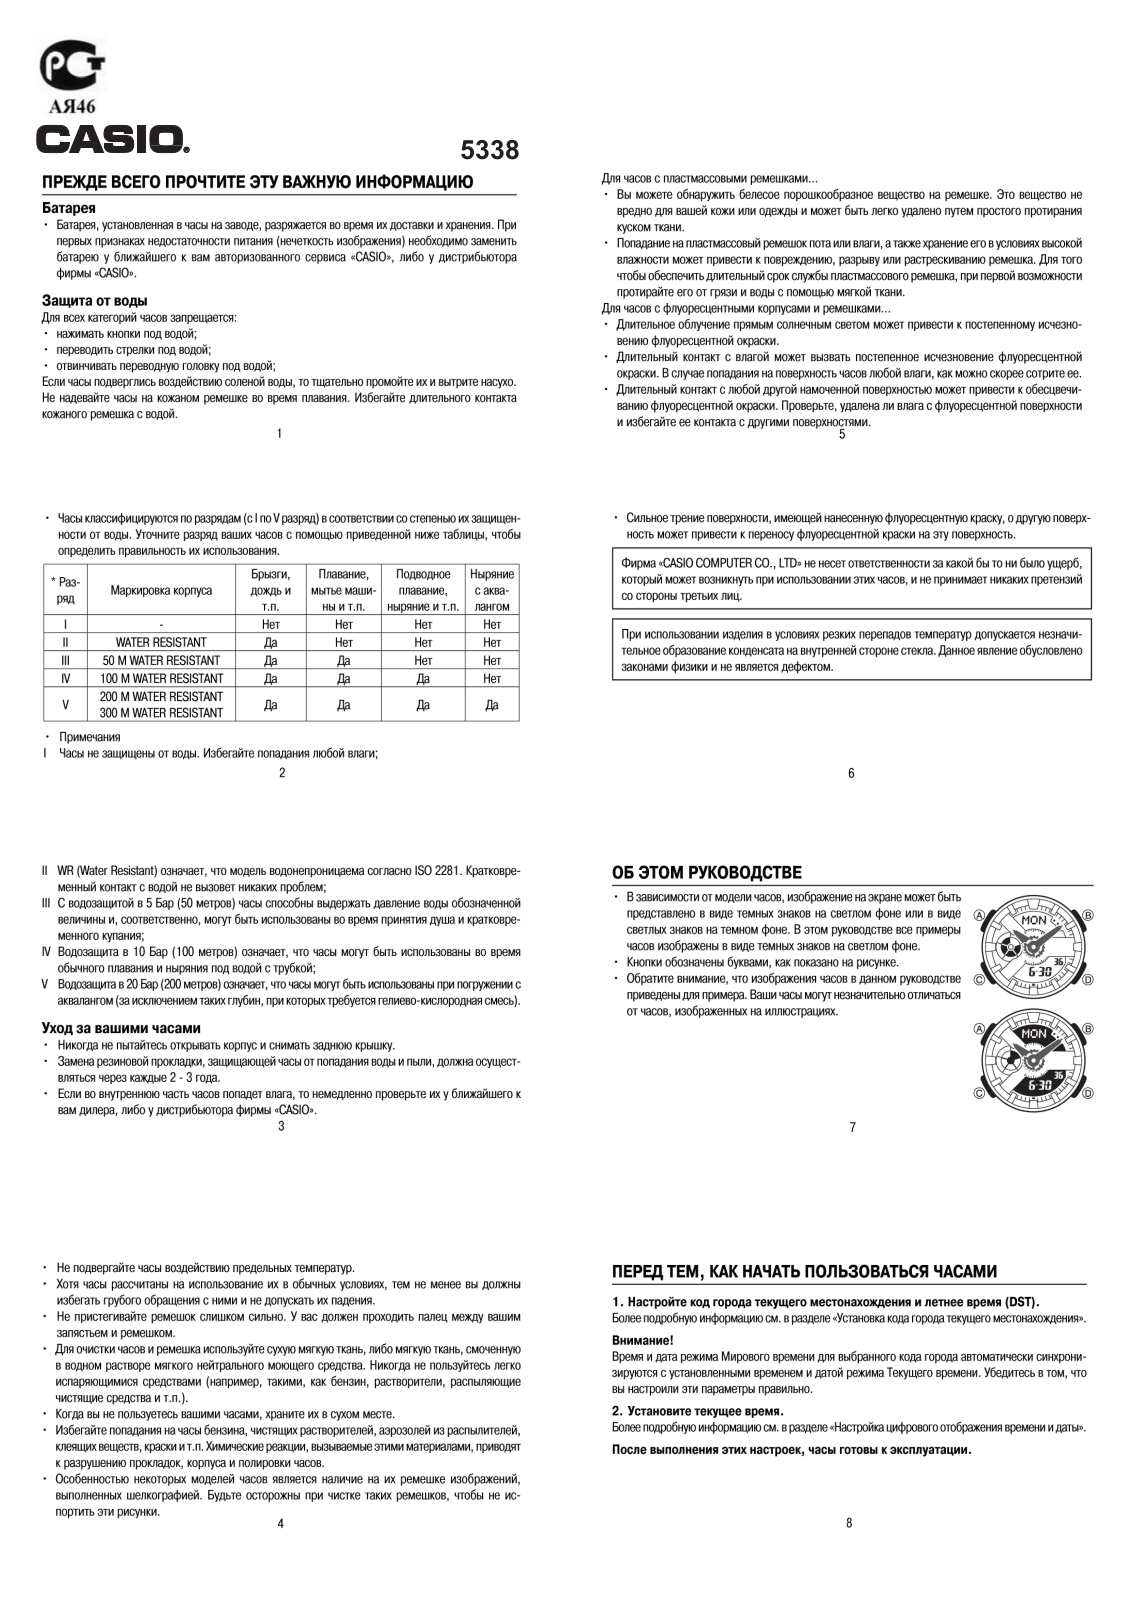 Casio BA-110SN-4A User Manual